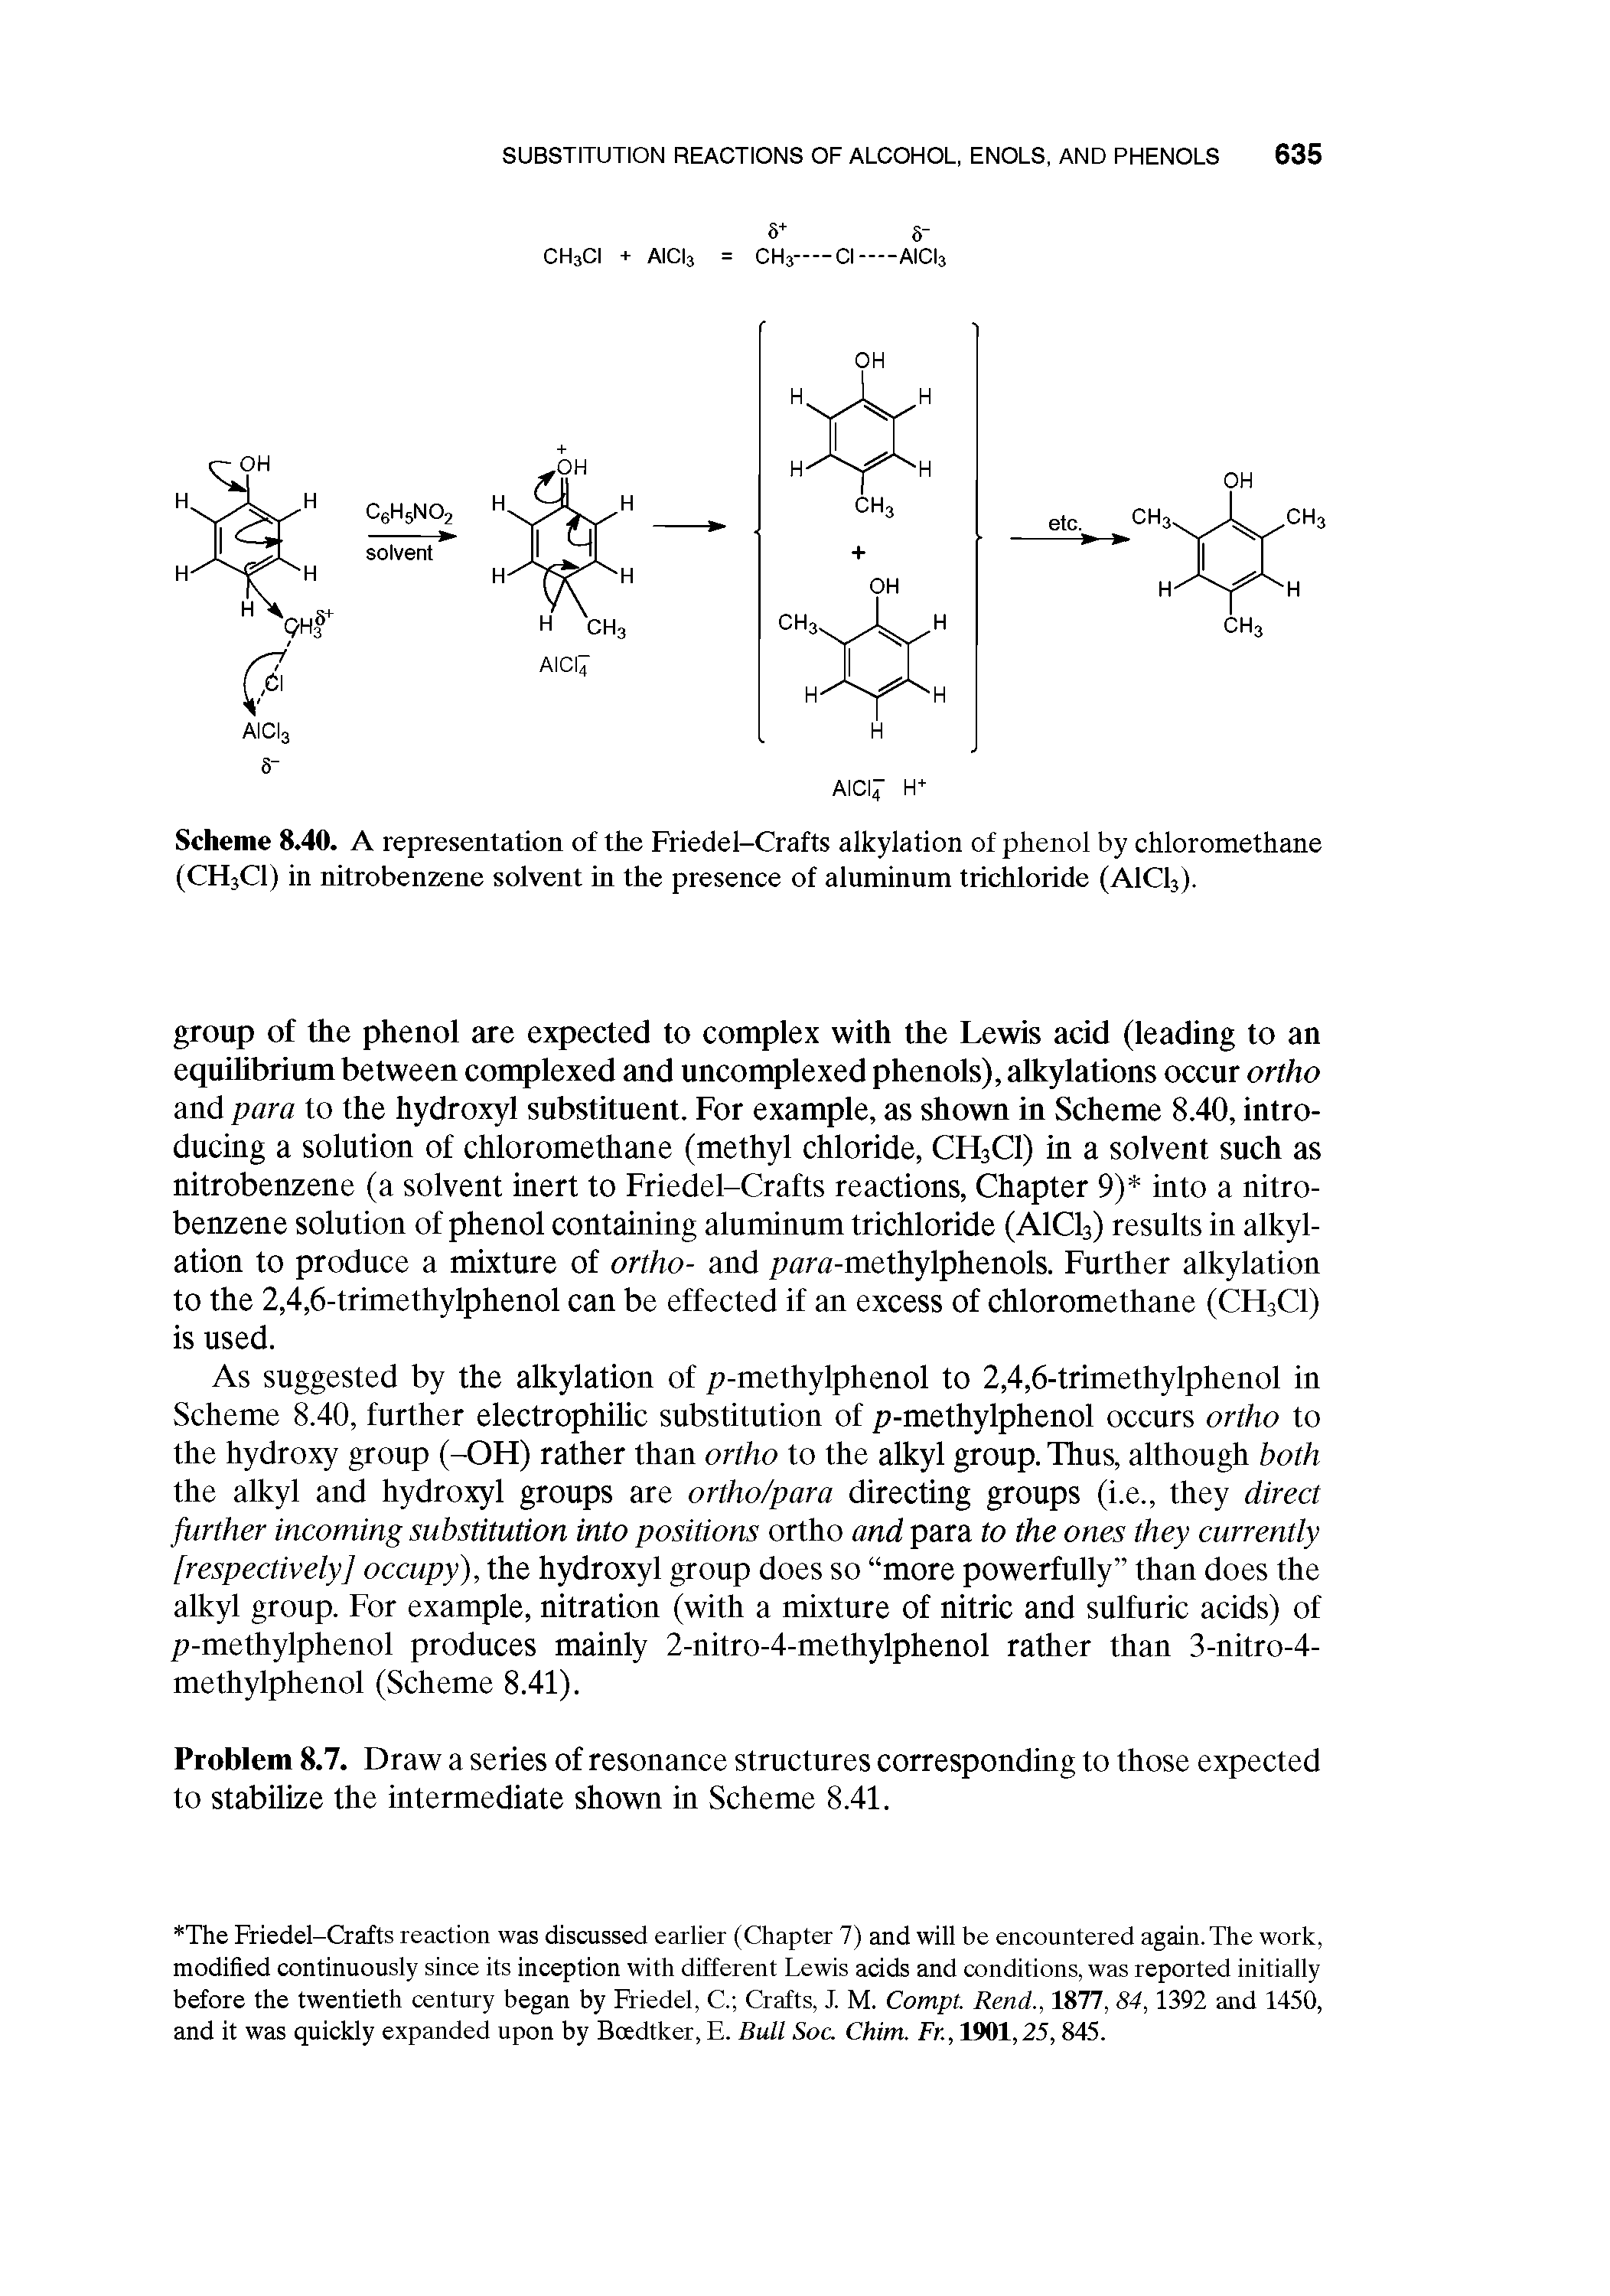 Scheme 8.40. A representation of the Friedel-Crafts alkylation of phenol by chloromethane (CH3CI) in nitrobenzene solvent in the presence of aluminum trichloride (AlClj).